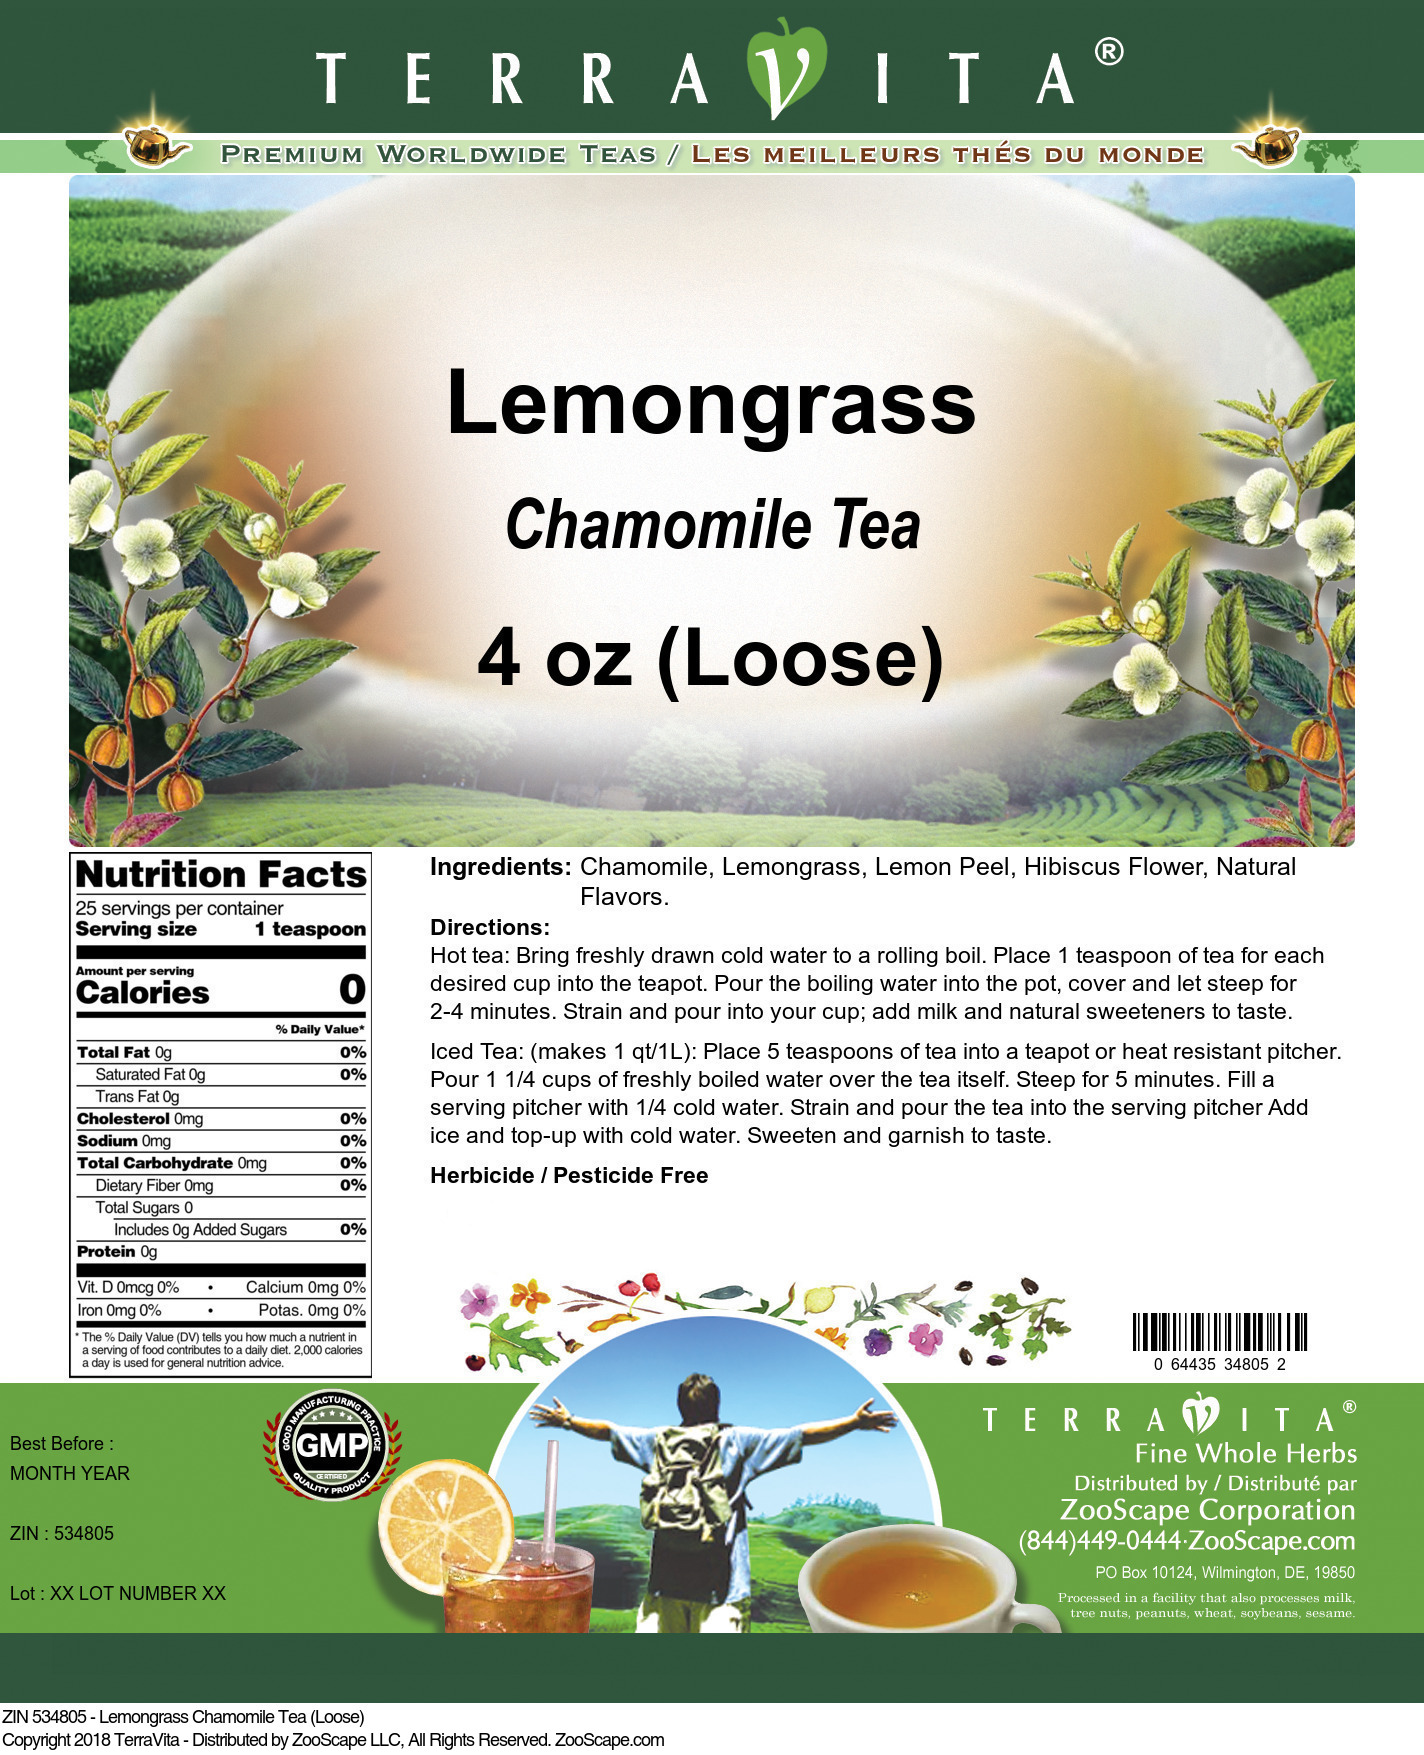 Lemongrass Chamomile Tea (Loose) - Label